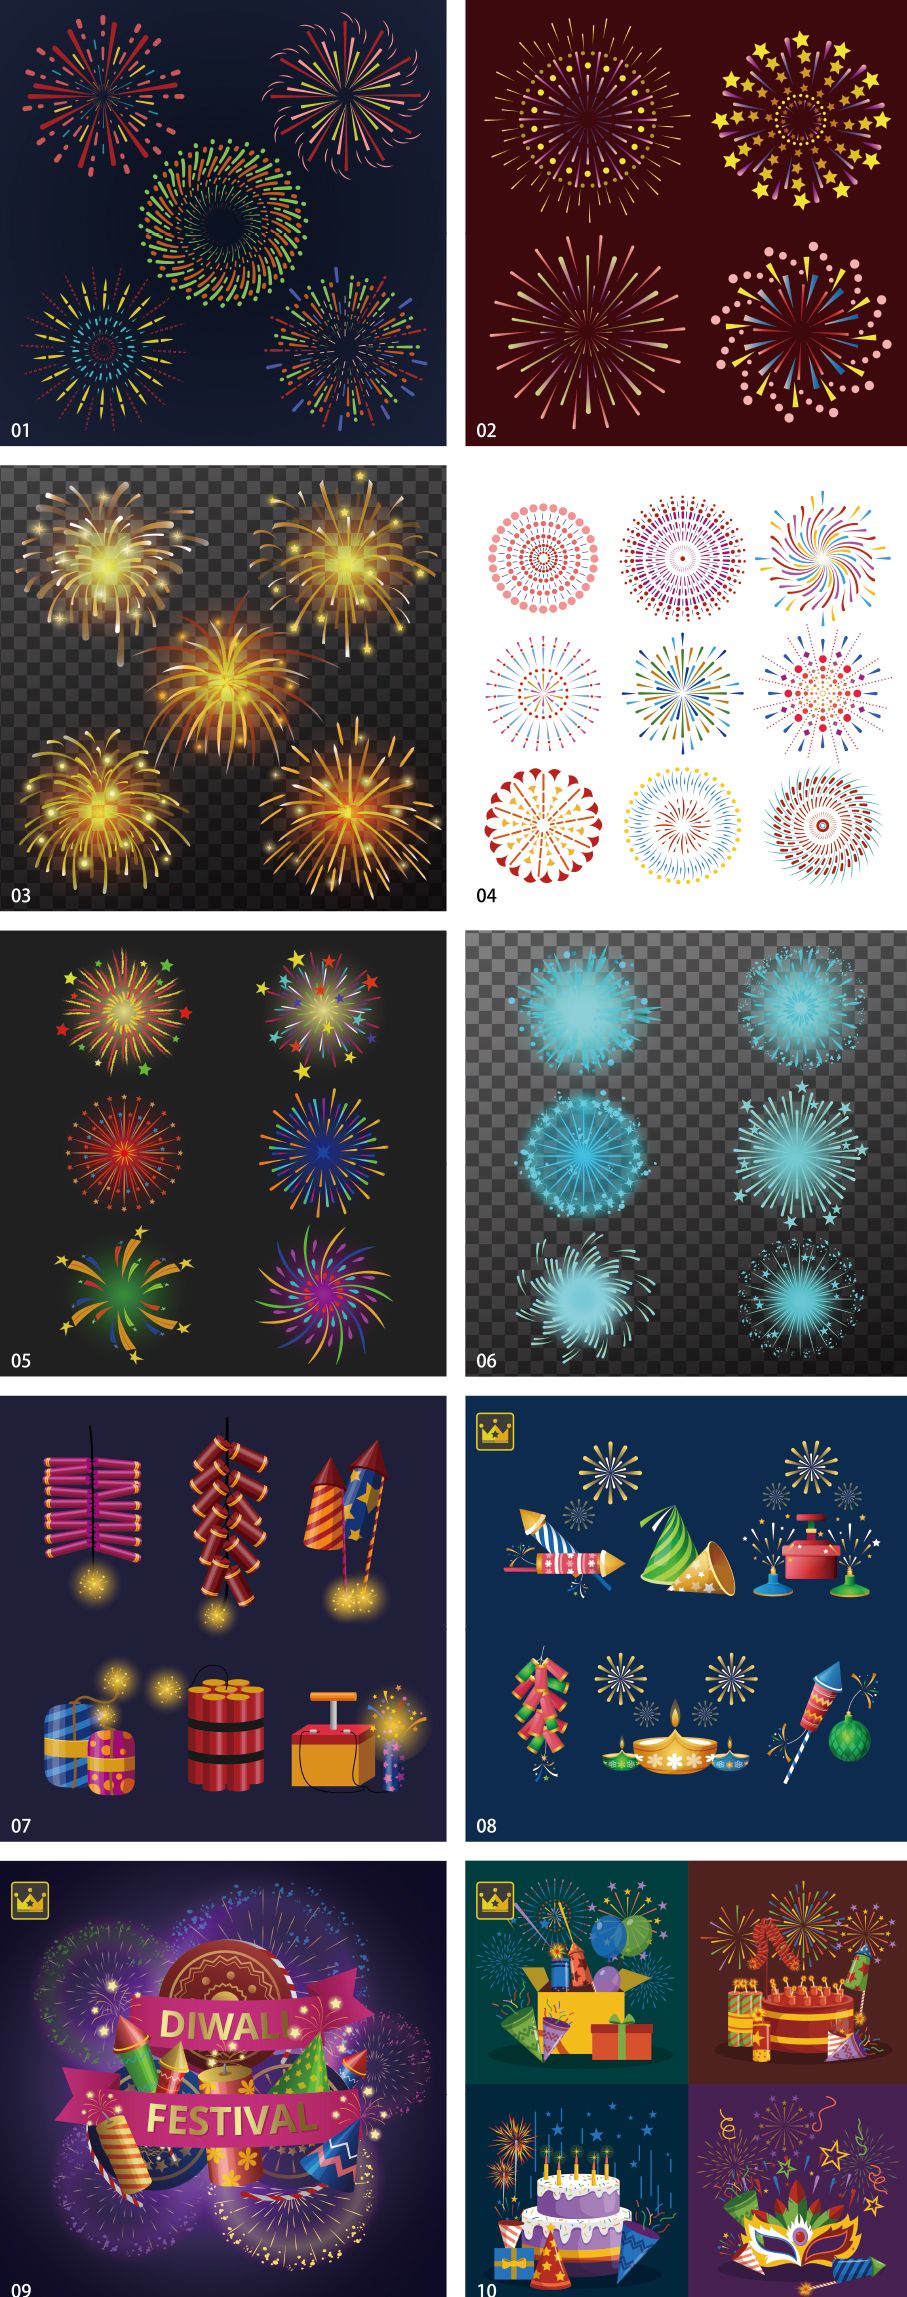 Fireworks illustration collection